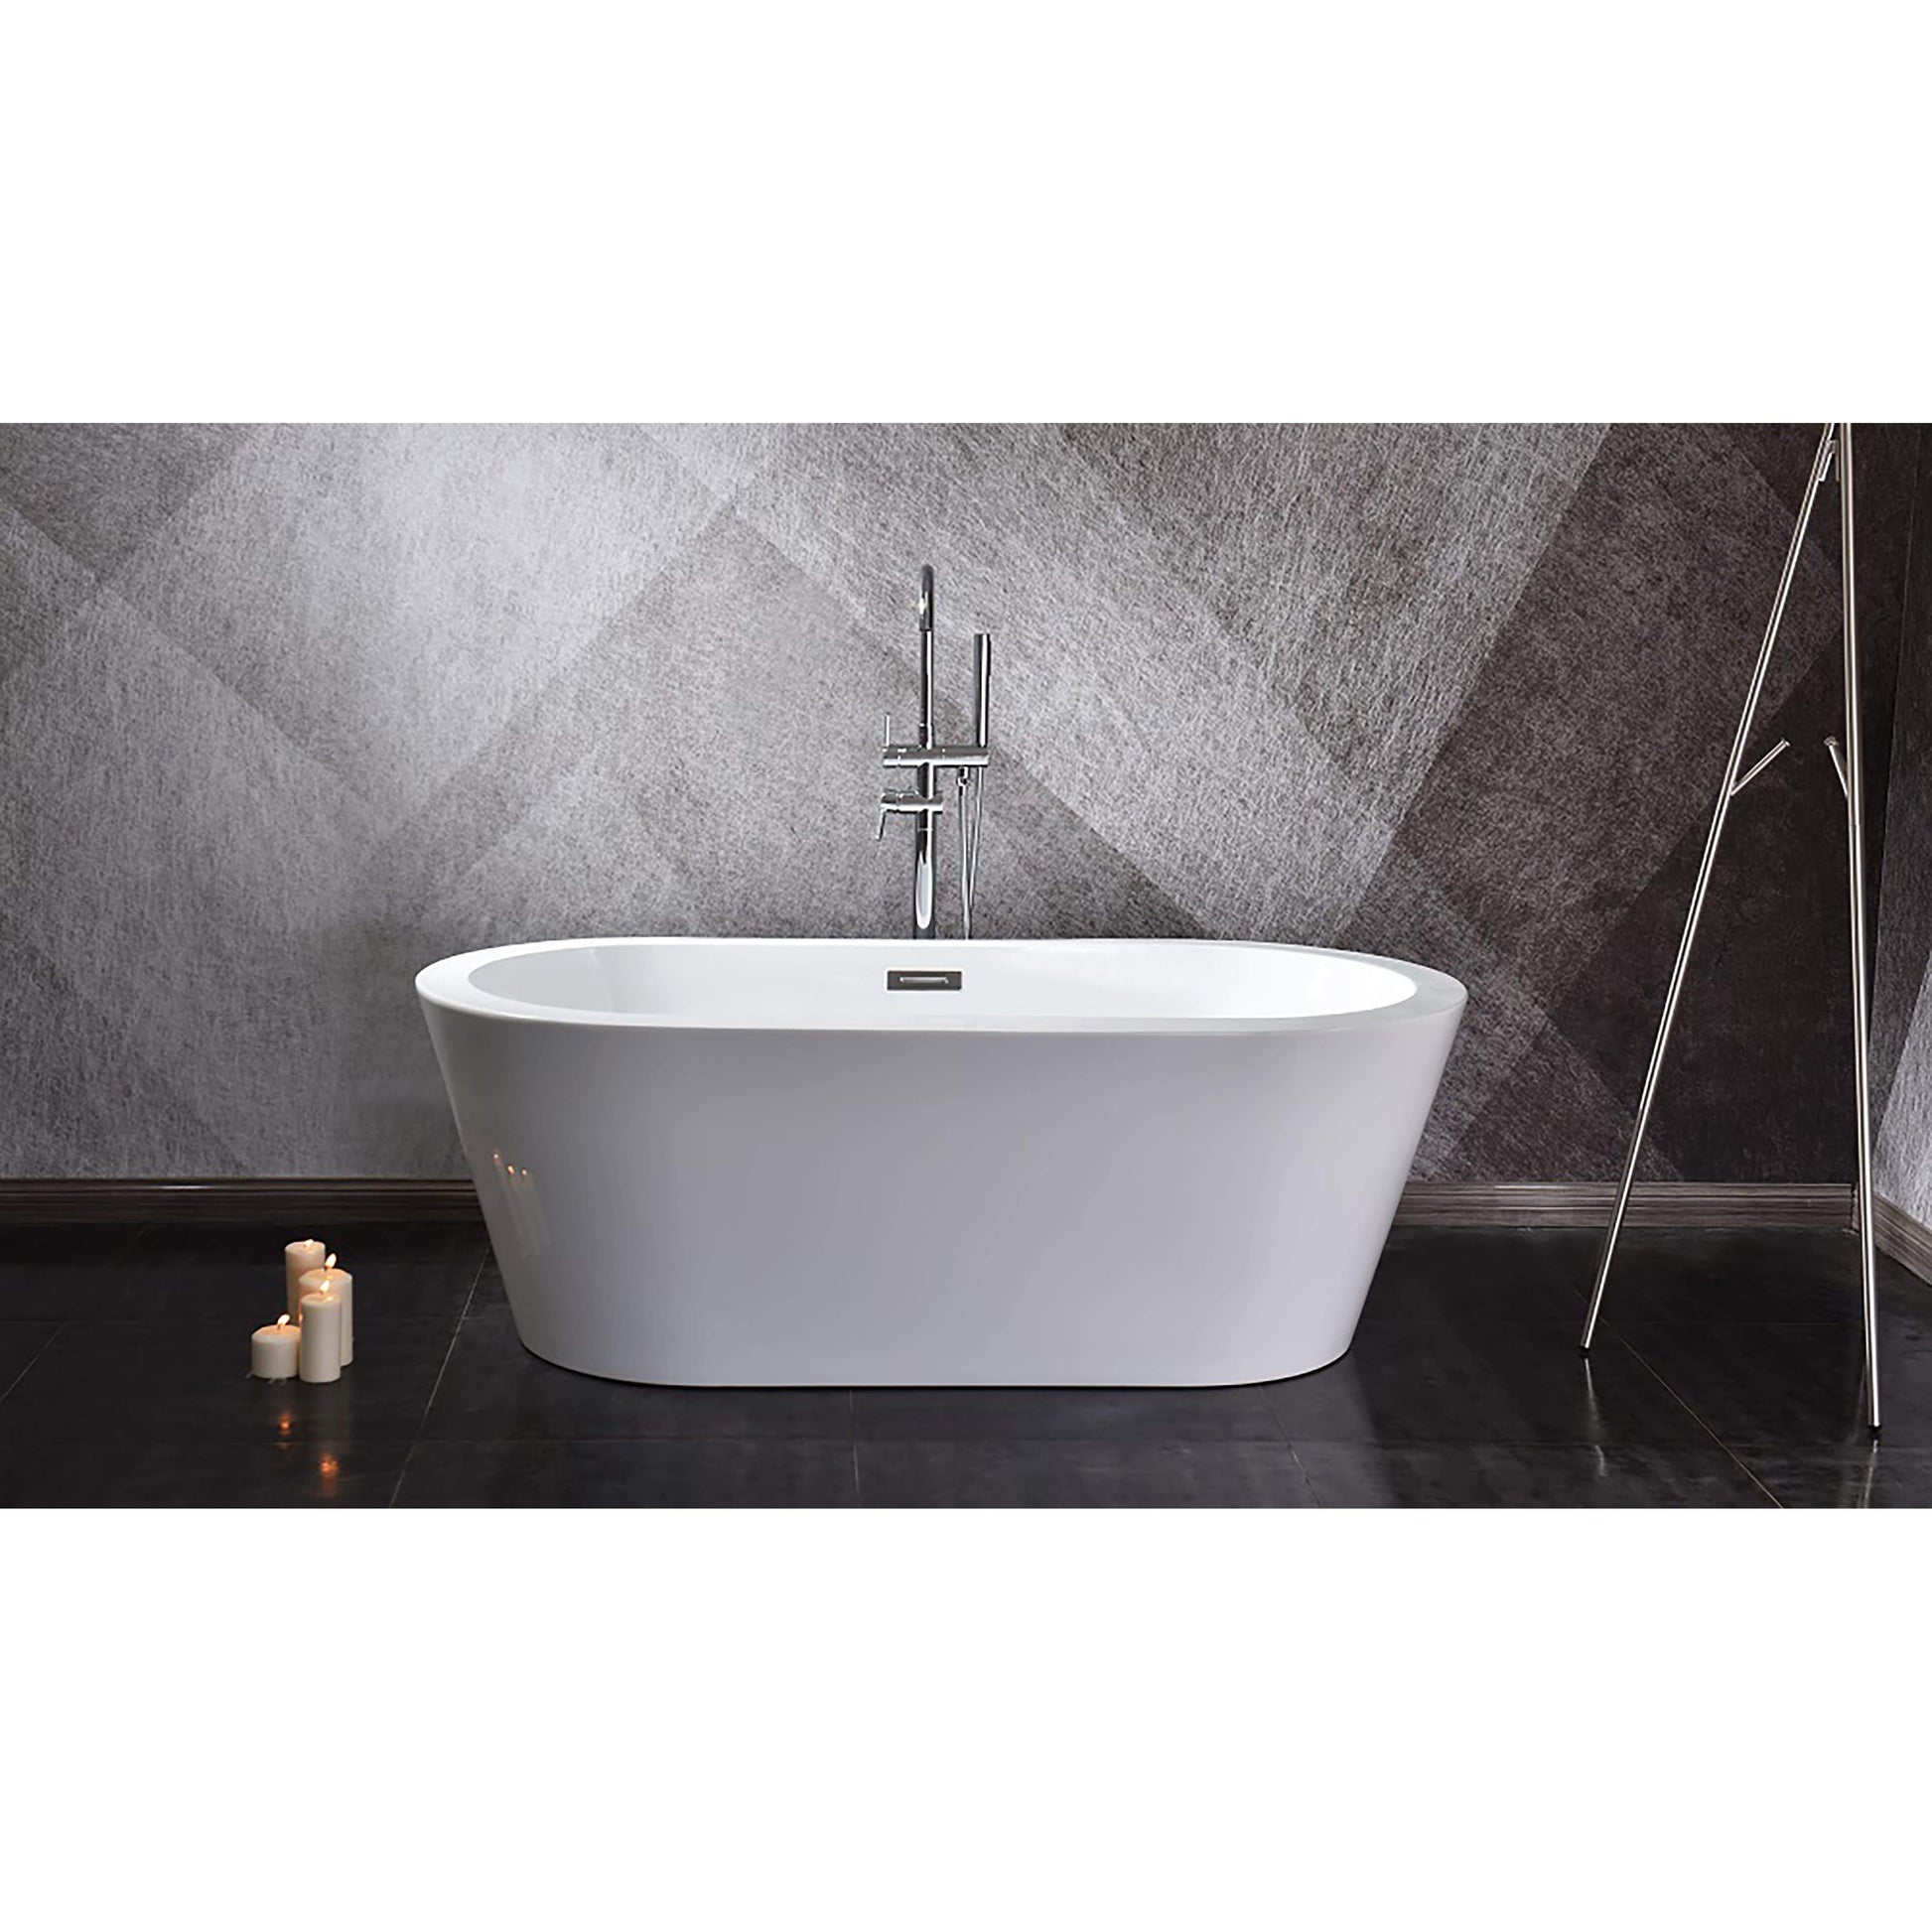 Bell + Modern Bathtubs and Tub Fillers 59" x 29.5" x 22" Telluride Free Standing Acrylic Bathtub with Chrome Drain